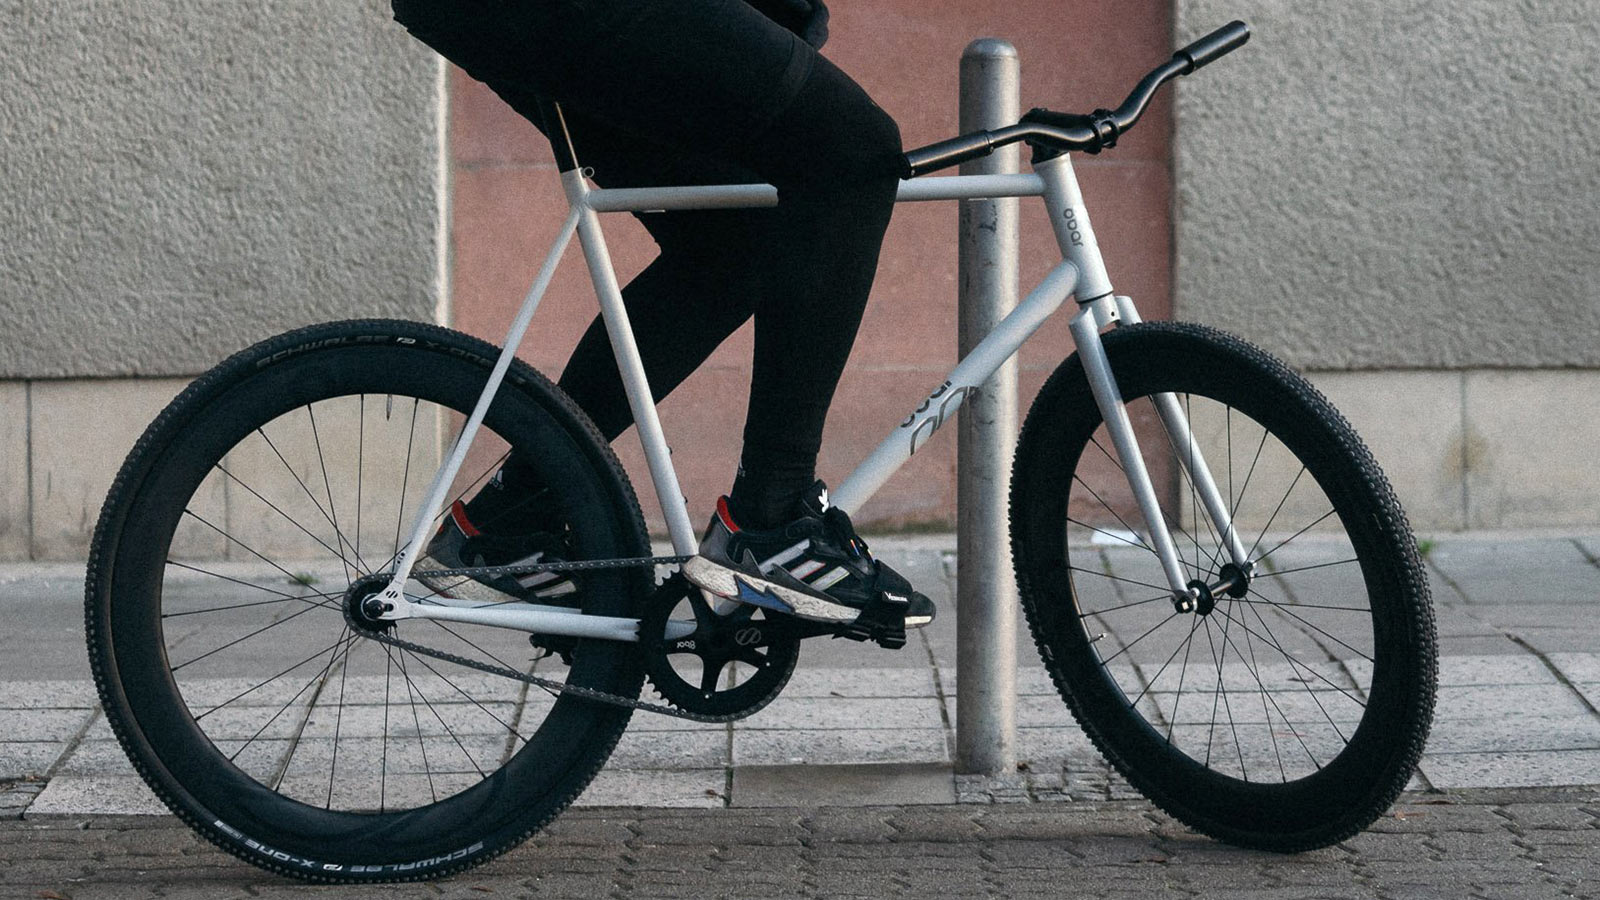 8bar Neukln steel v2 bicicletta fixie singlespeed versatile ed economica, foto di Stefan Haehnel, tracklocross